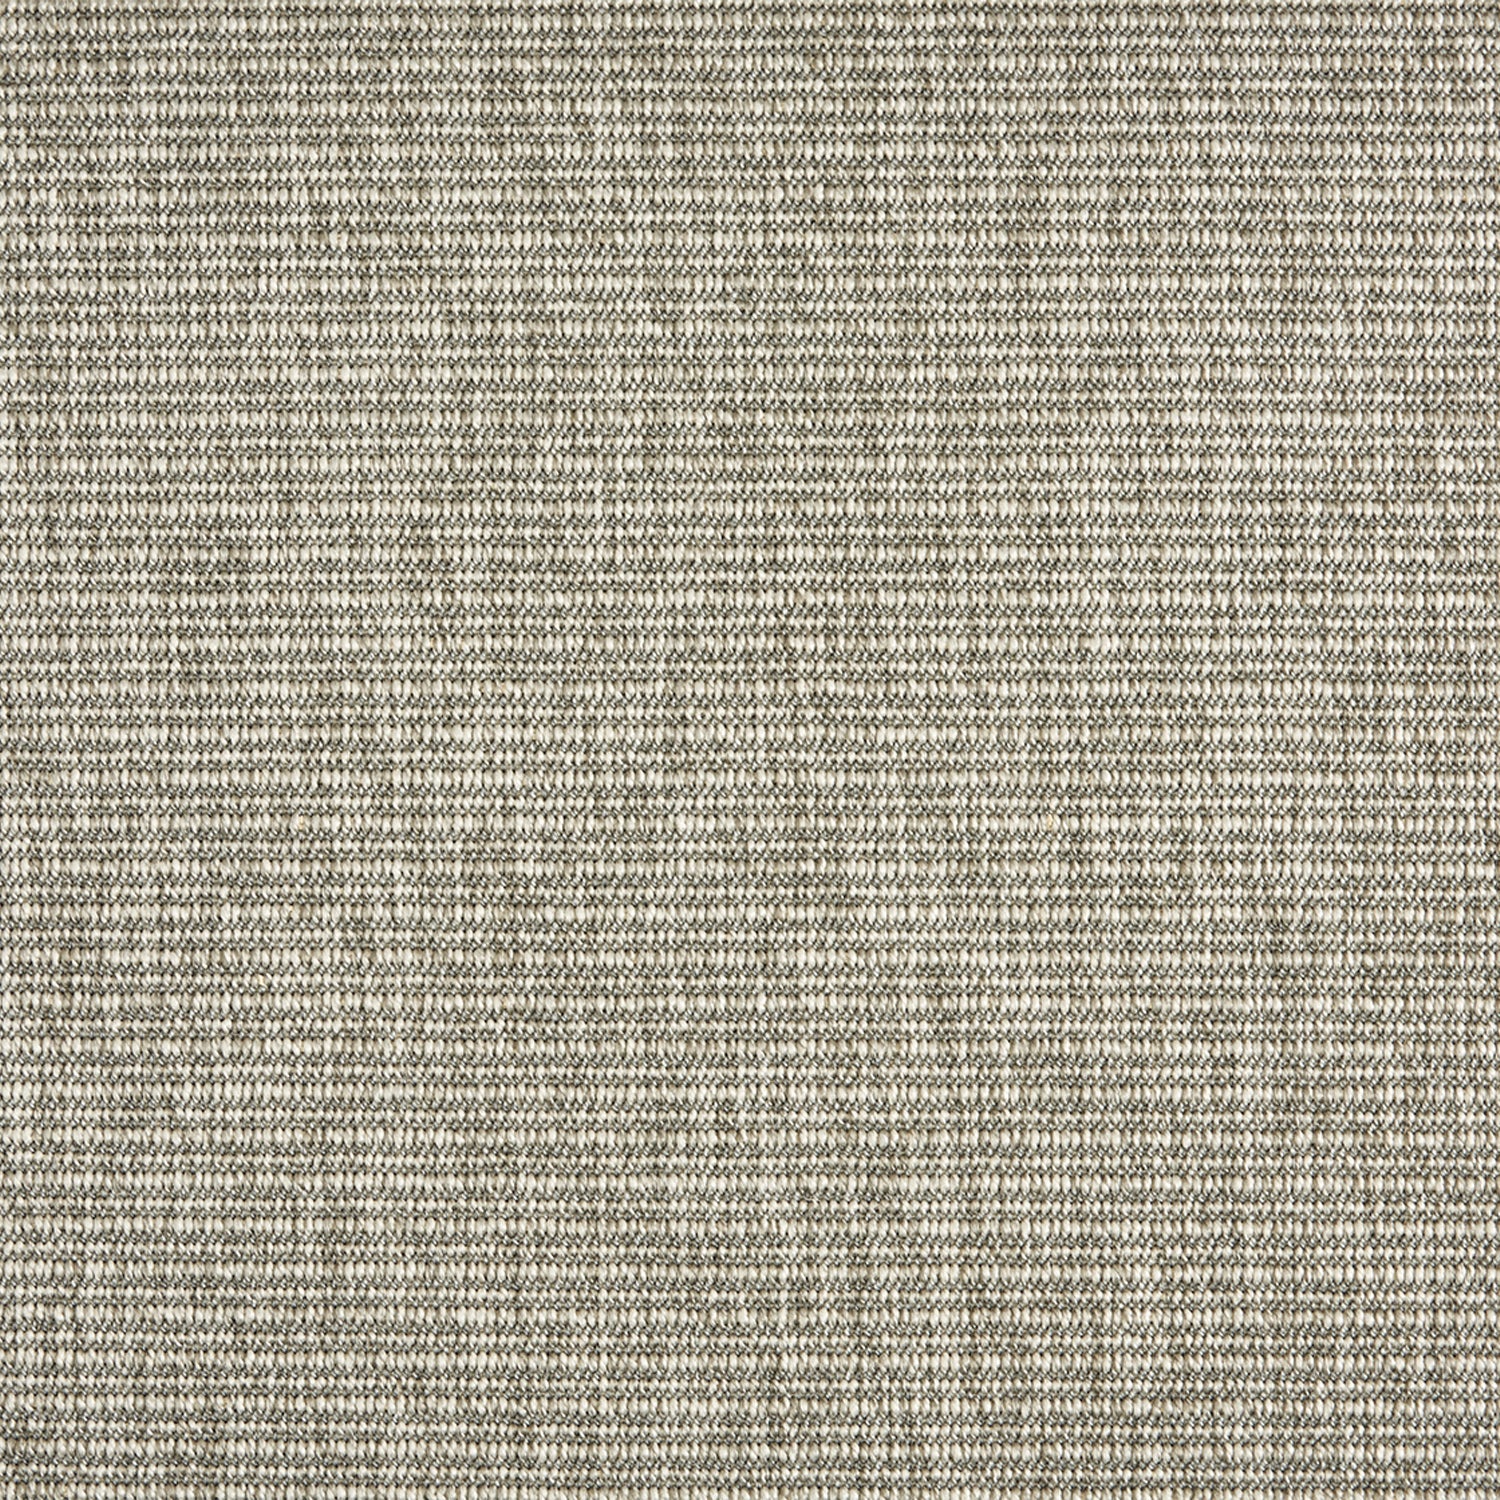 Outdoor broadloom carpet swatch in a ribbed flat weave in mottled heather gray.